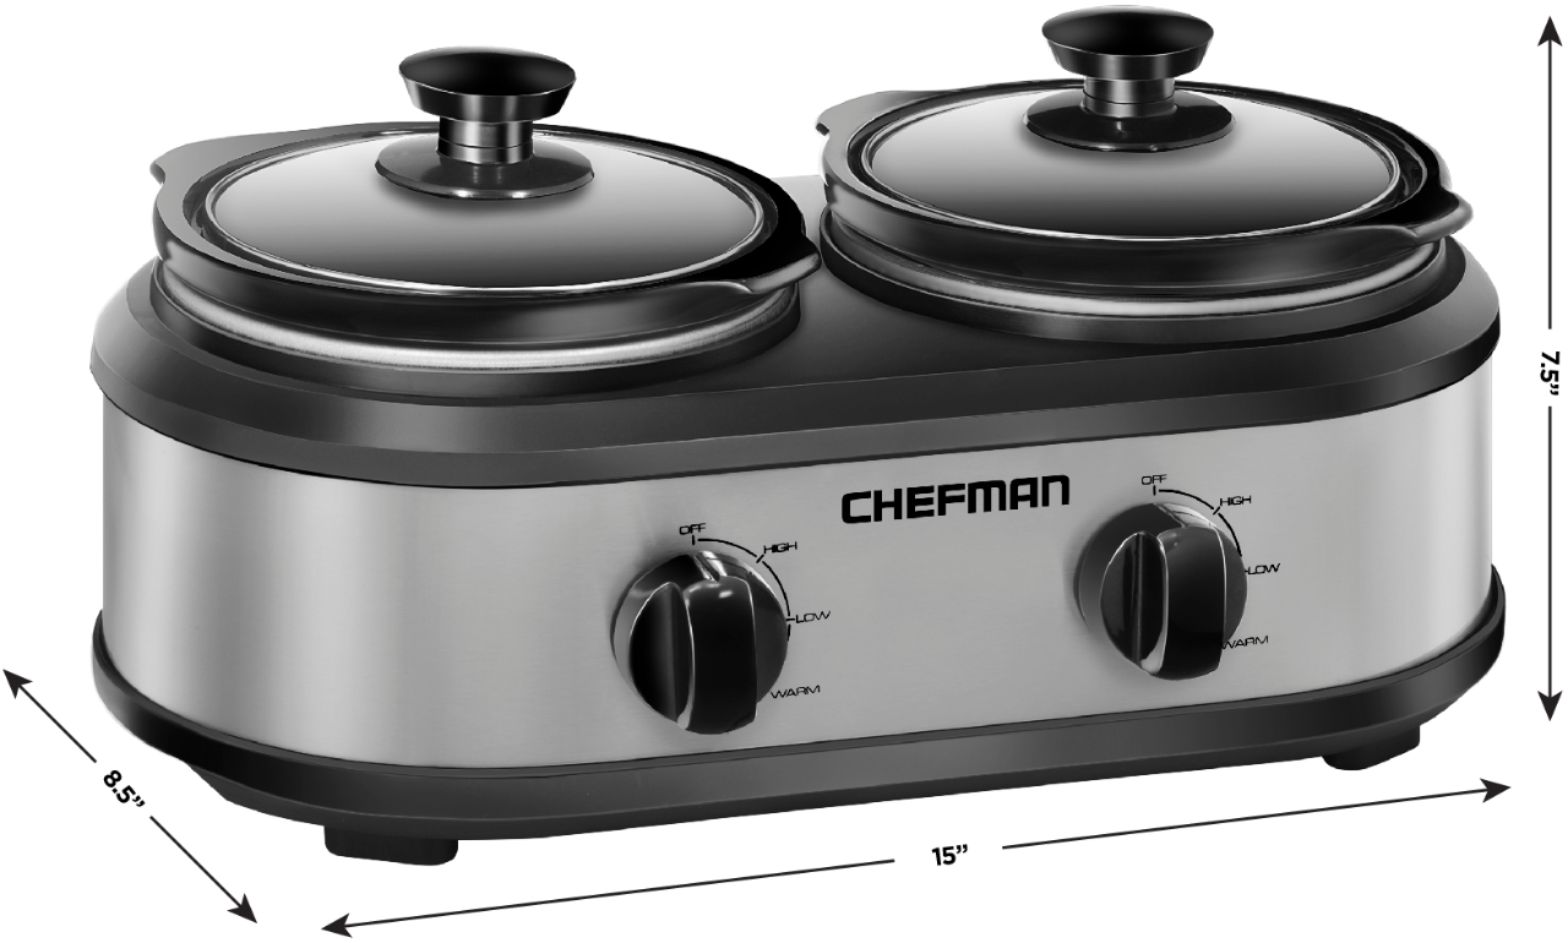 Cooks 1.5 quart slow cooker - appliances - by owner - sale - craigslist